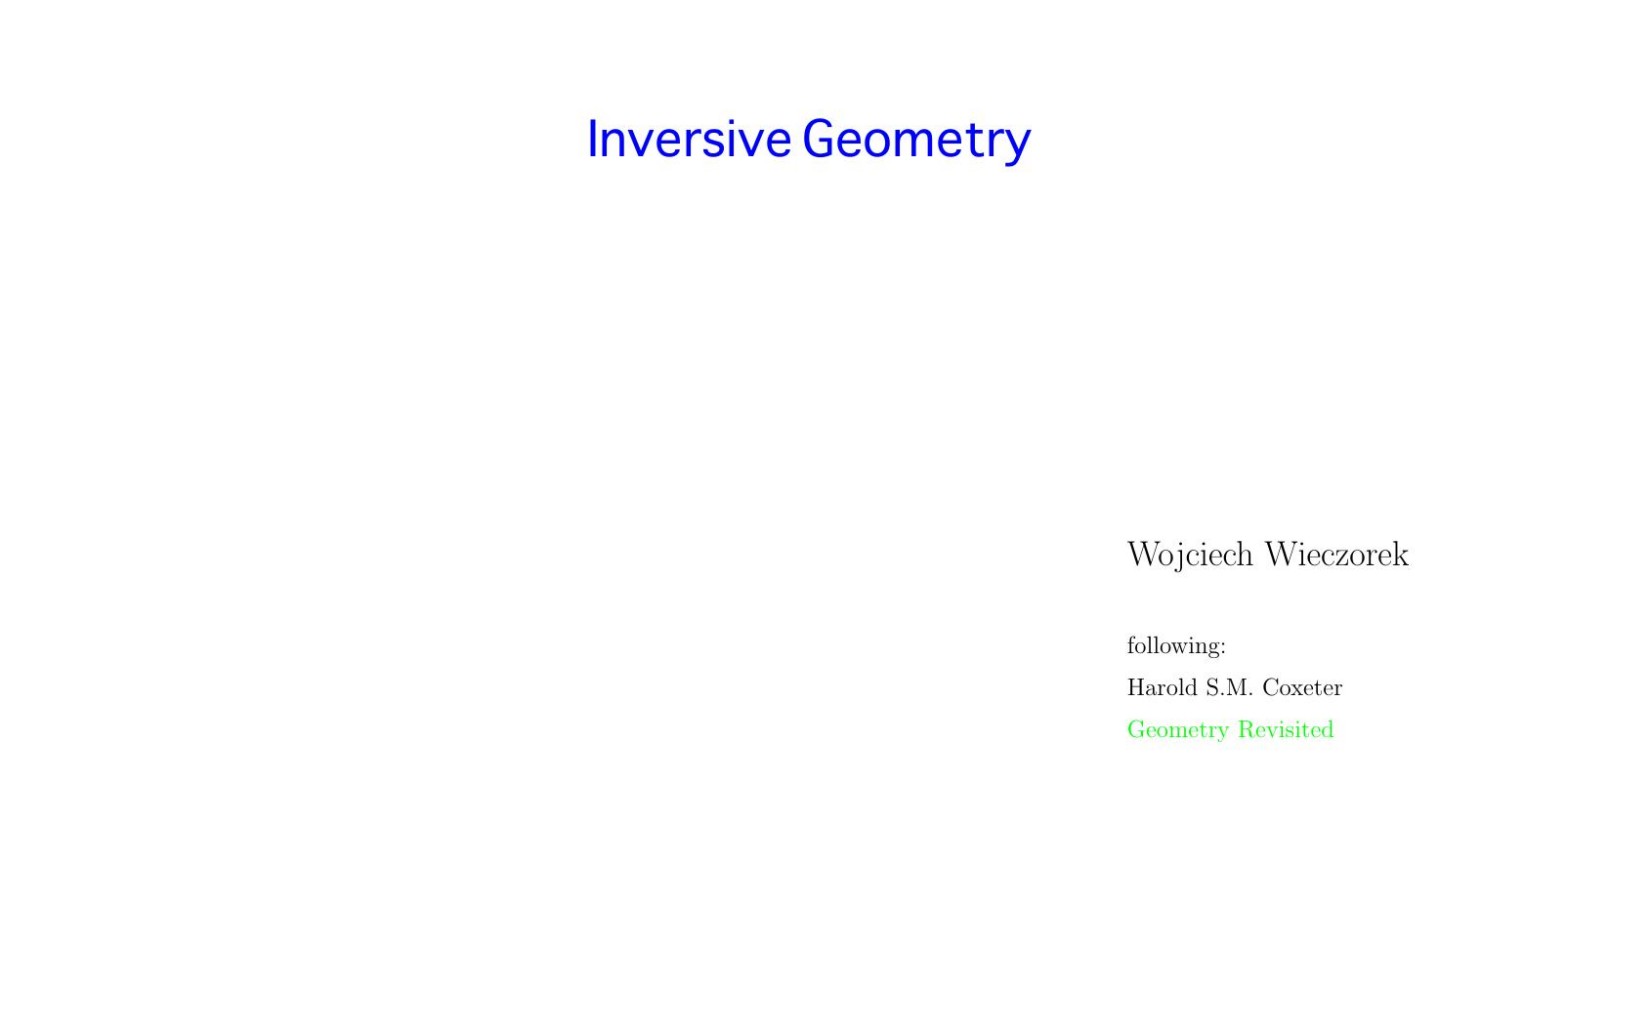 Inversive Geometry (following Harold S.M. Coxeter)